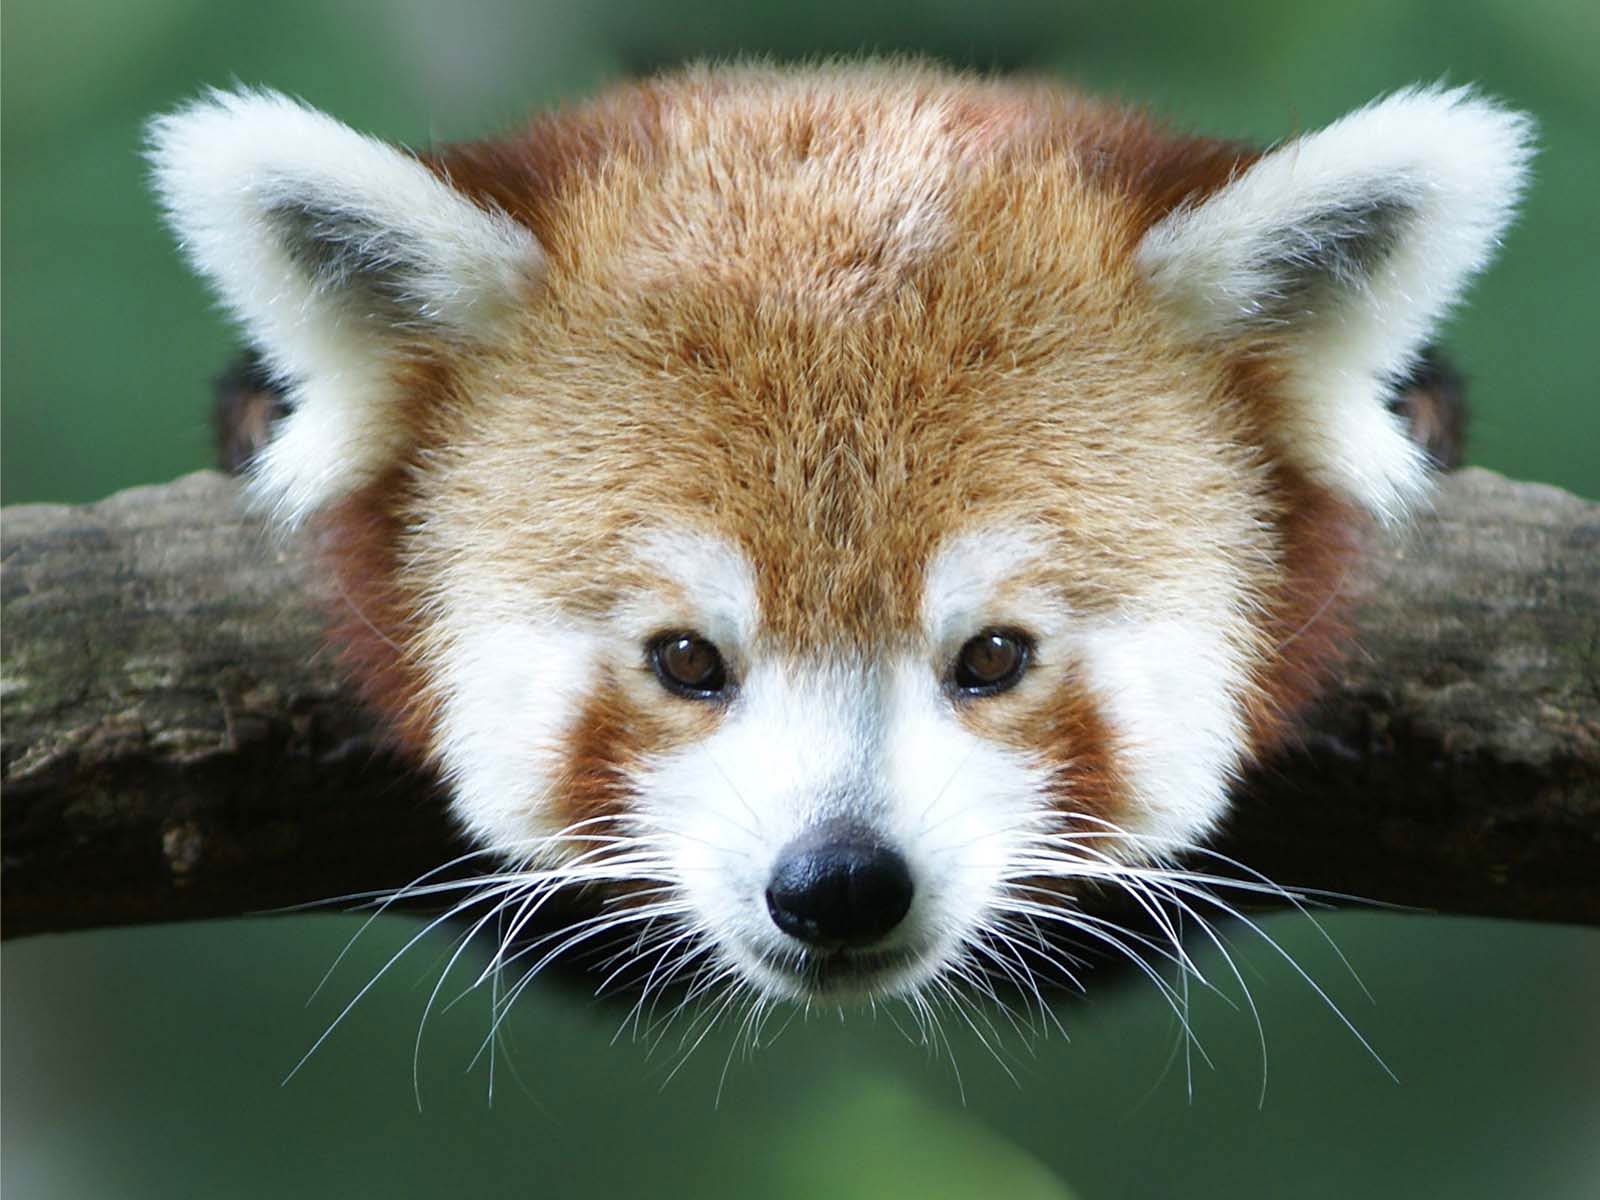 Red Panda Image. Free Download Wallpaper from wallpaperank.com